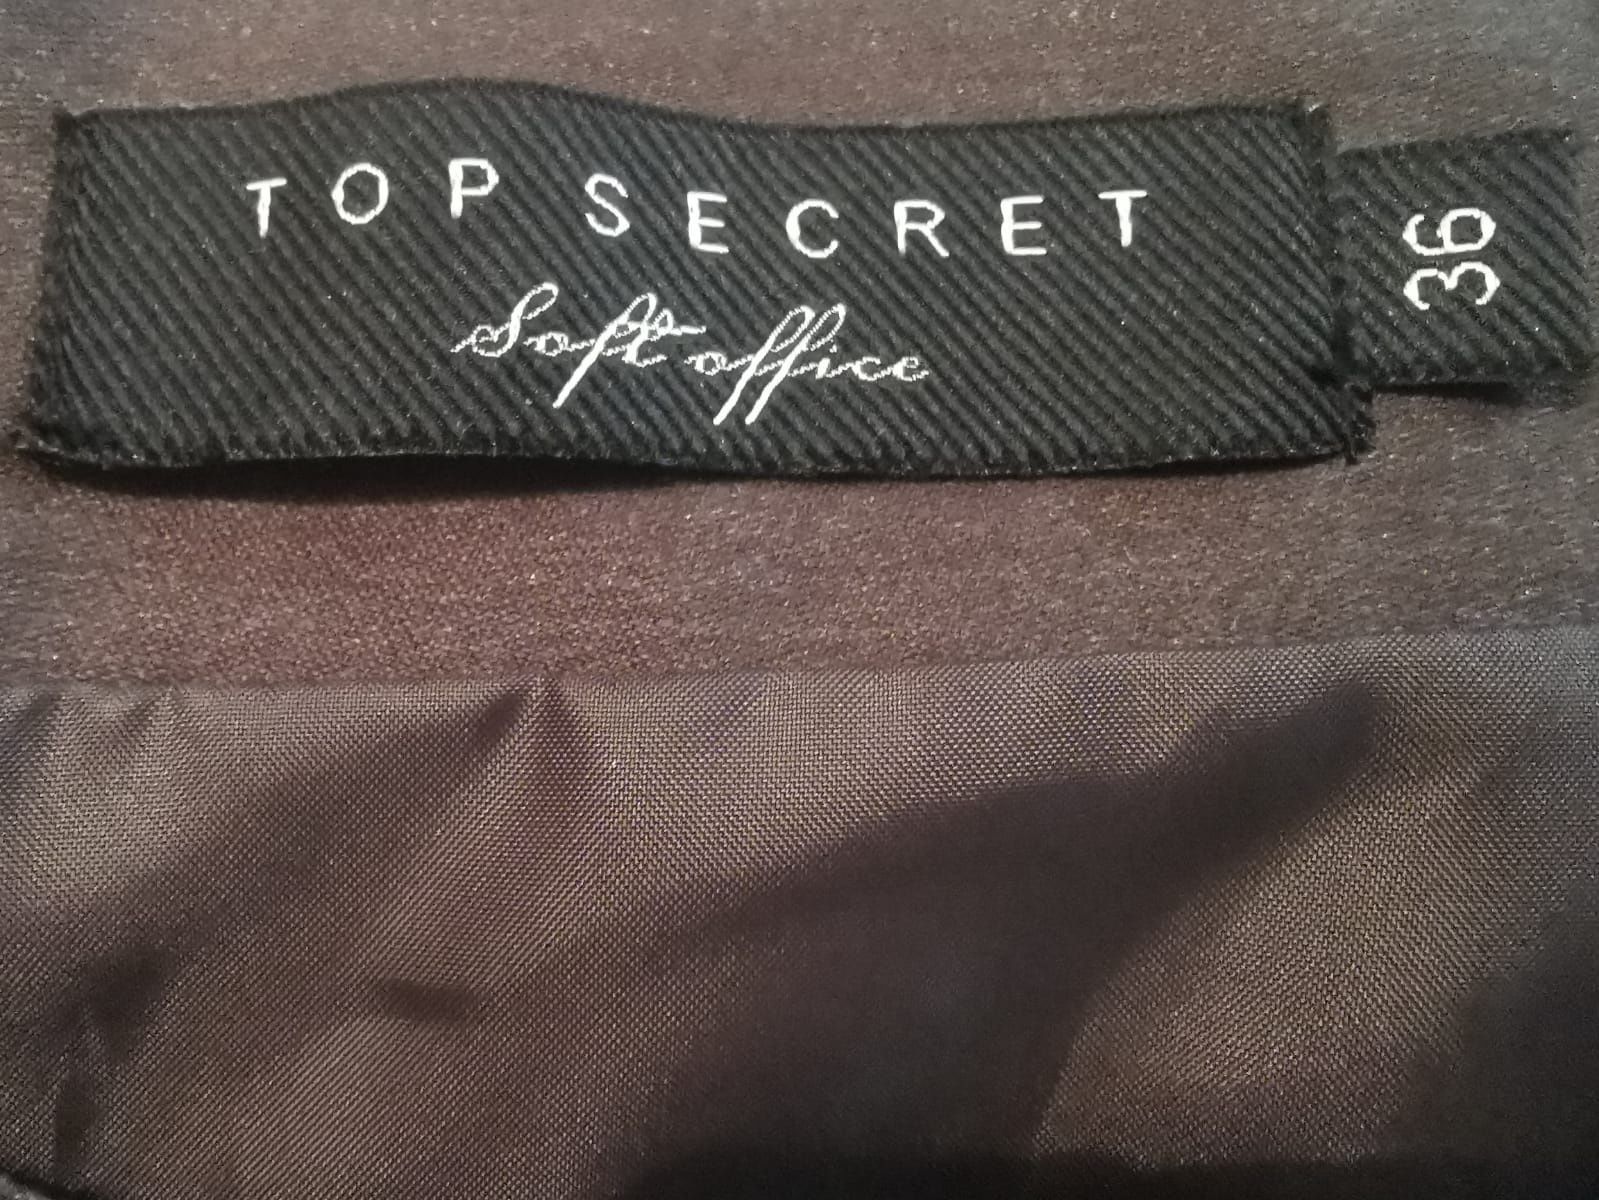 Stylowa, elegancka spódnica marki Top Secret